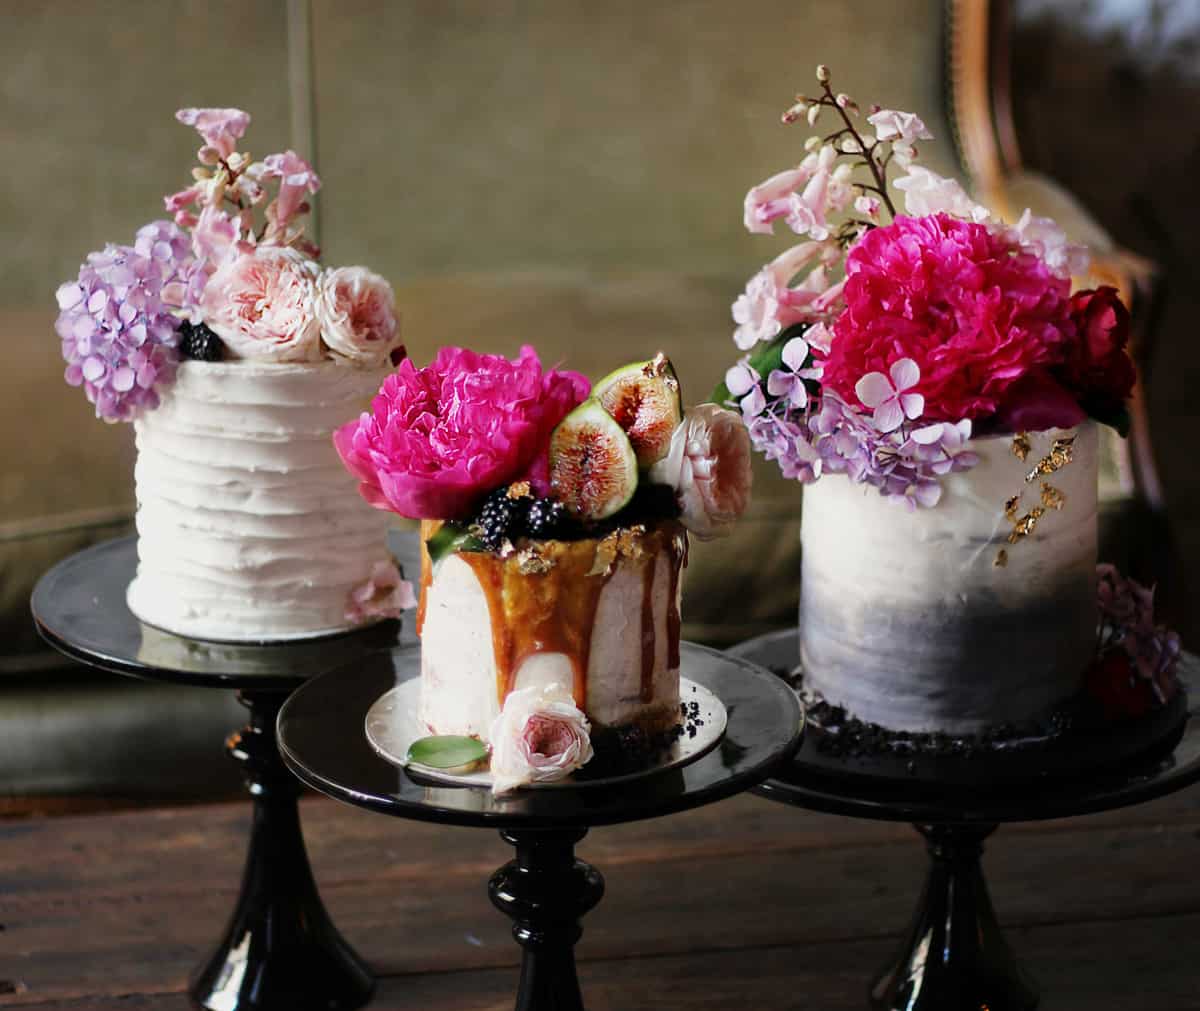 SUKAR creative wedding cakes and desserts, Perth WA